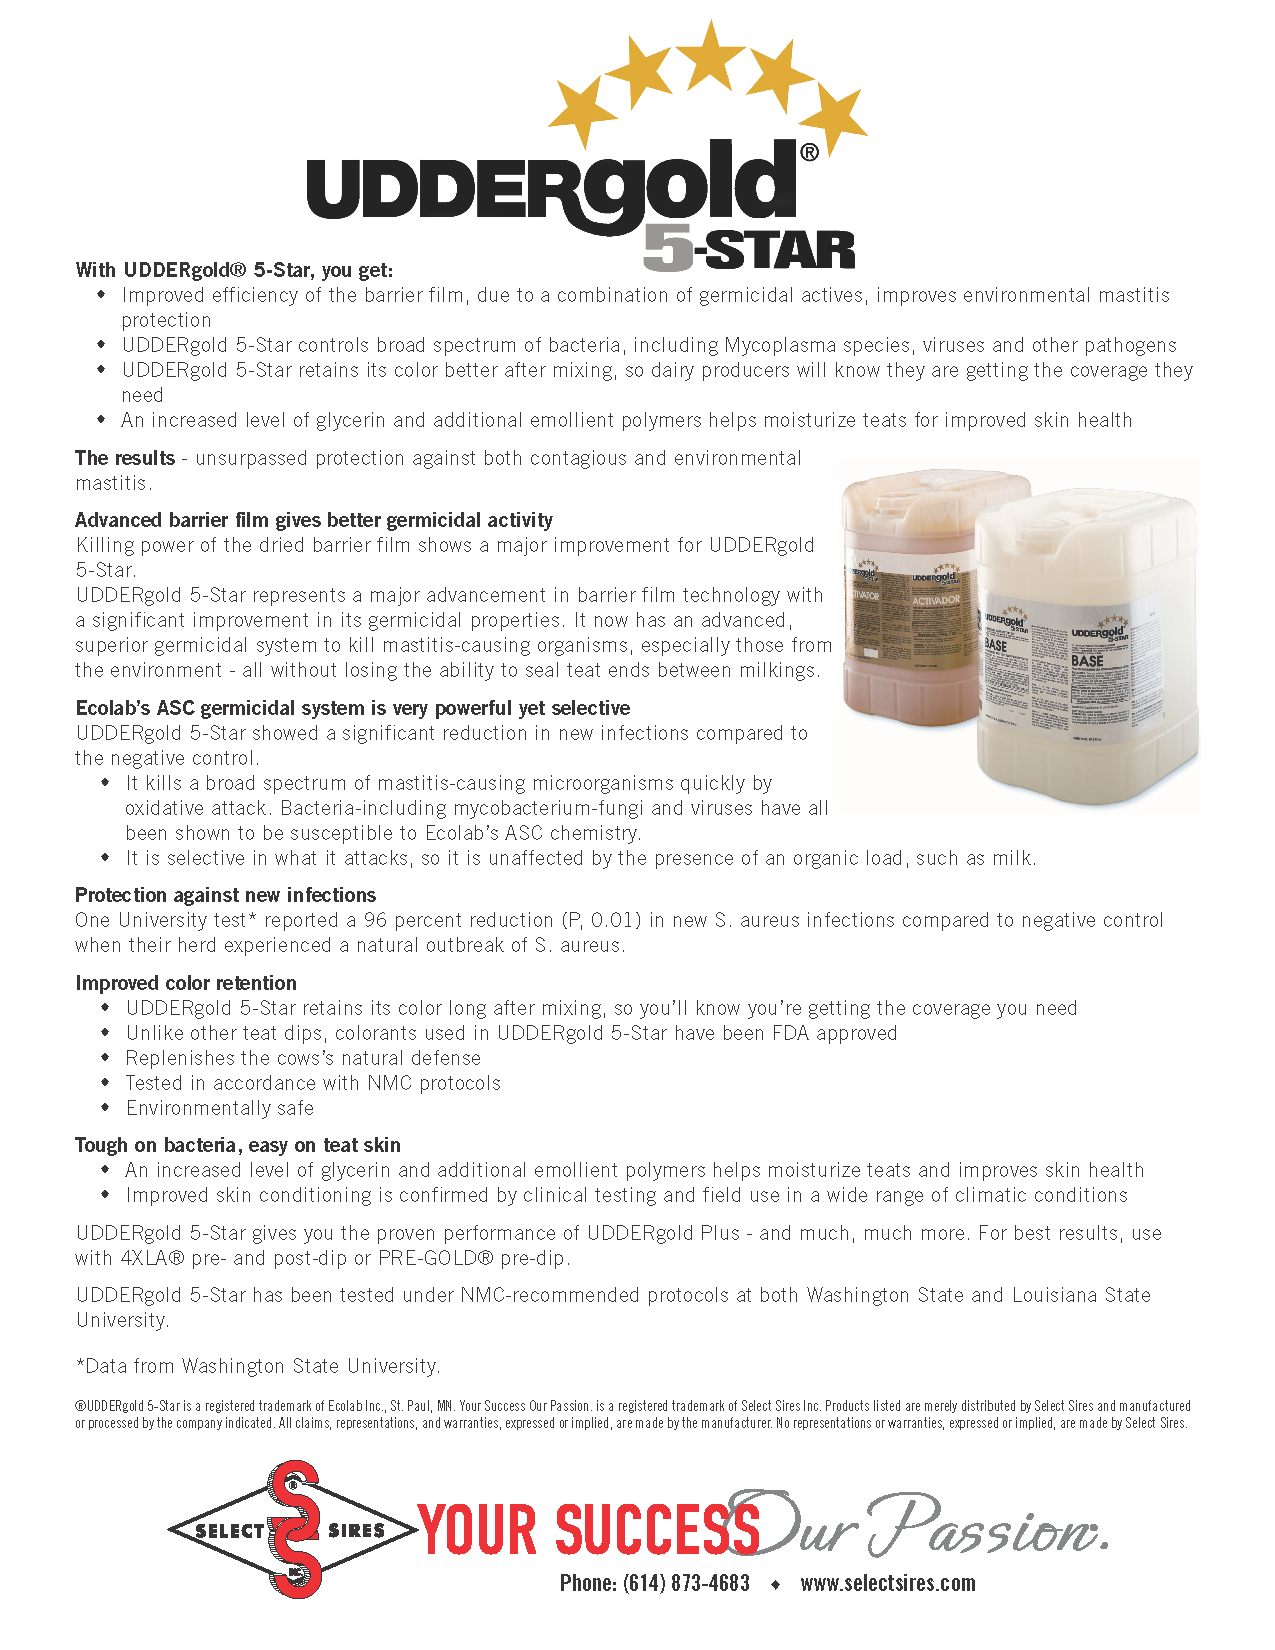 UDDERgold 5-Star